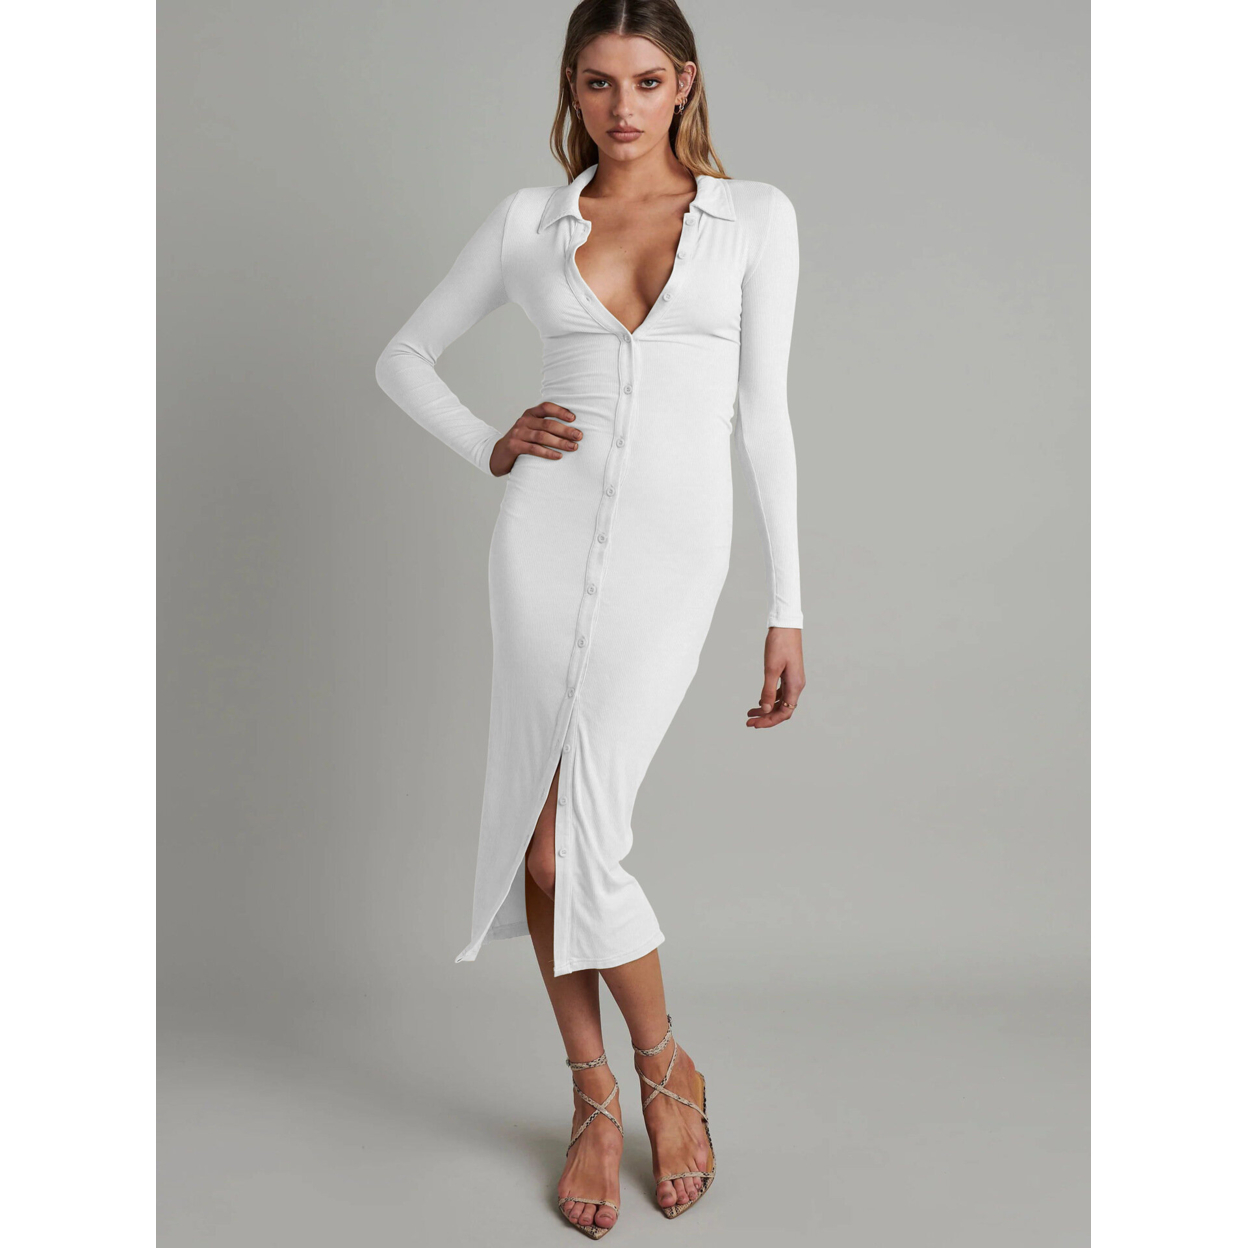 Sexy Fashion Cardigan Long Sleeve Shirt Skirt Women's Long Dress - White, L